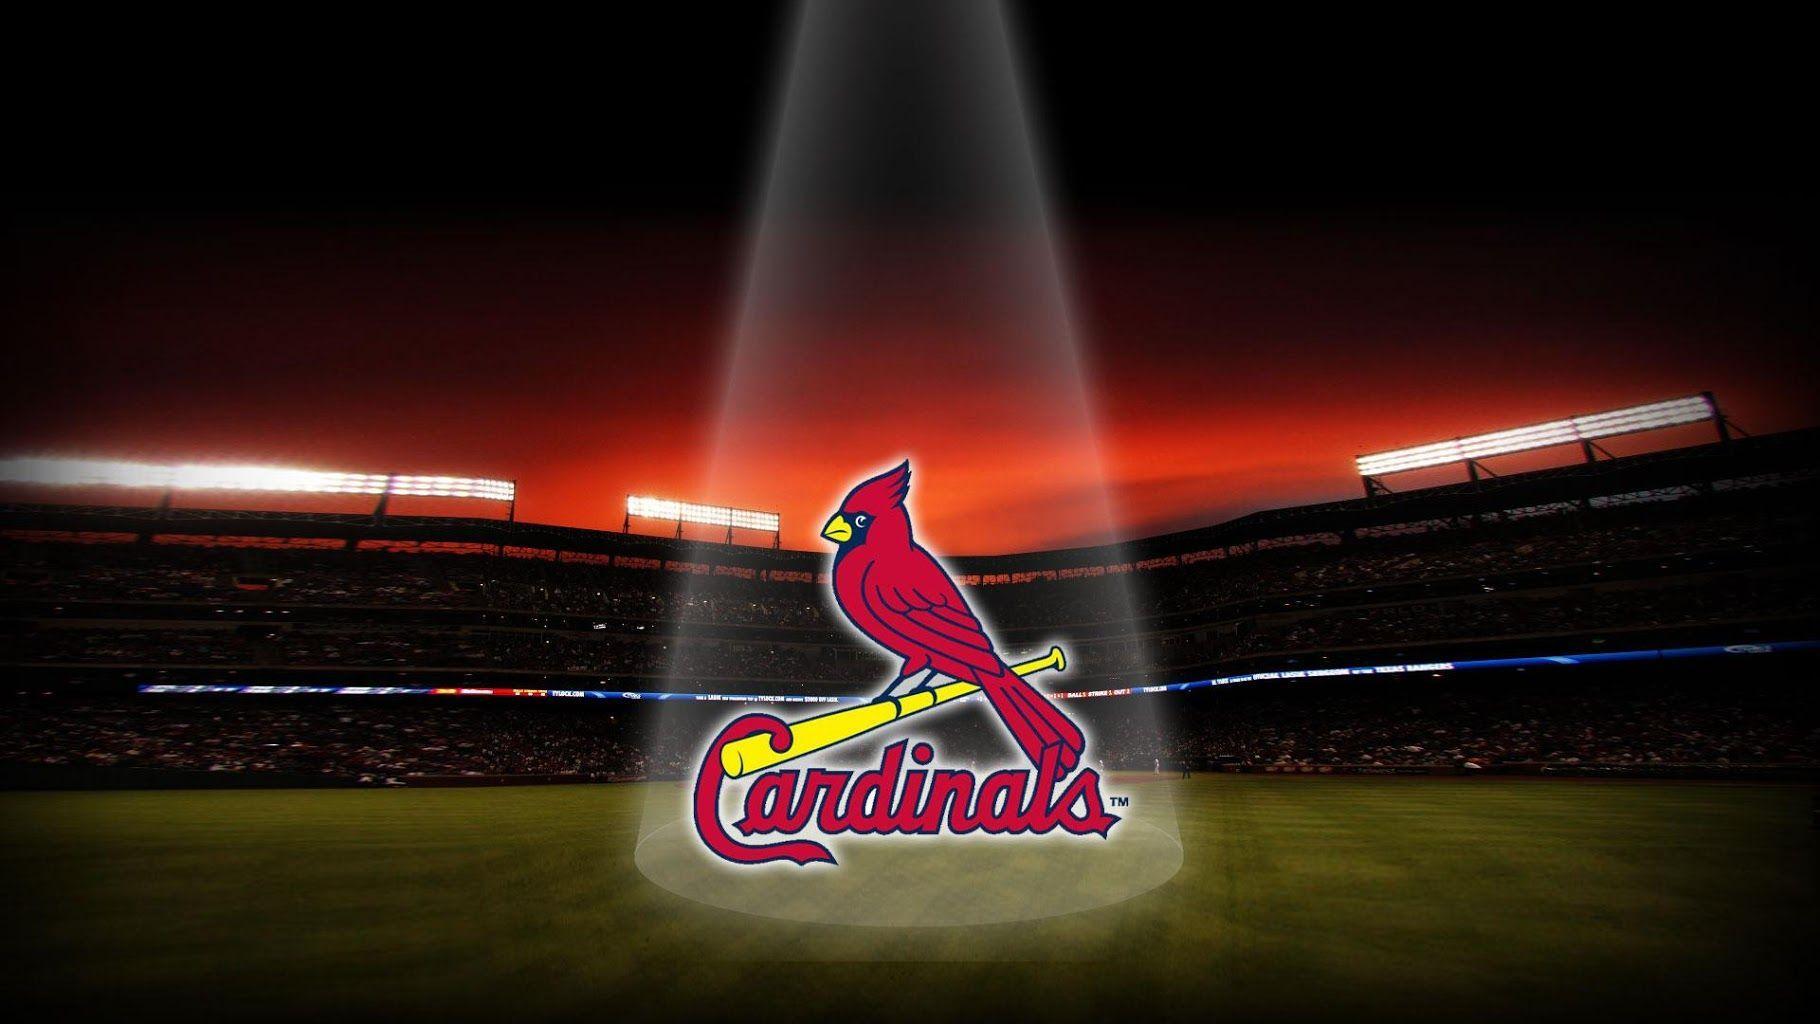 st. louis cardinals wallpaper image. St. Louis Cardinals Desktop